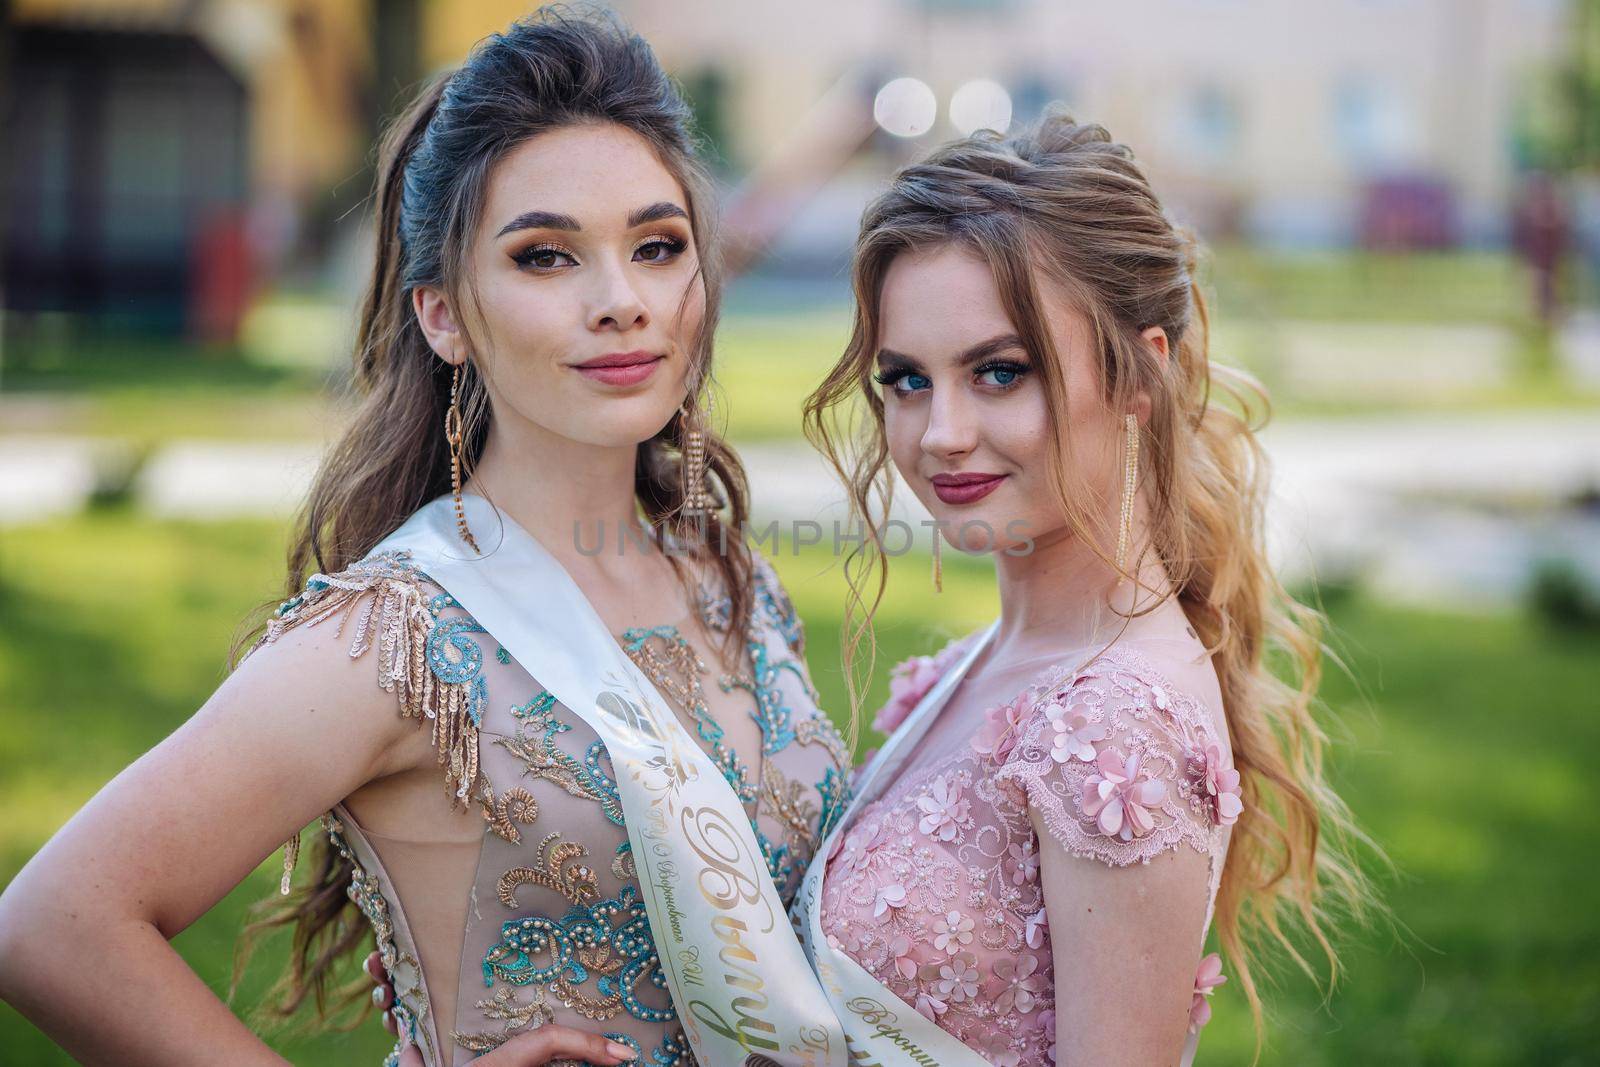 Beautiful schoolgirls in dress at the prom at school